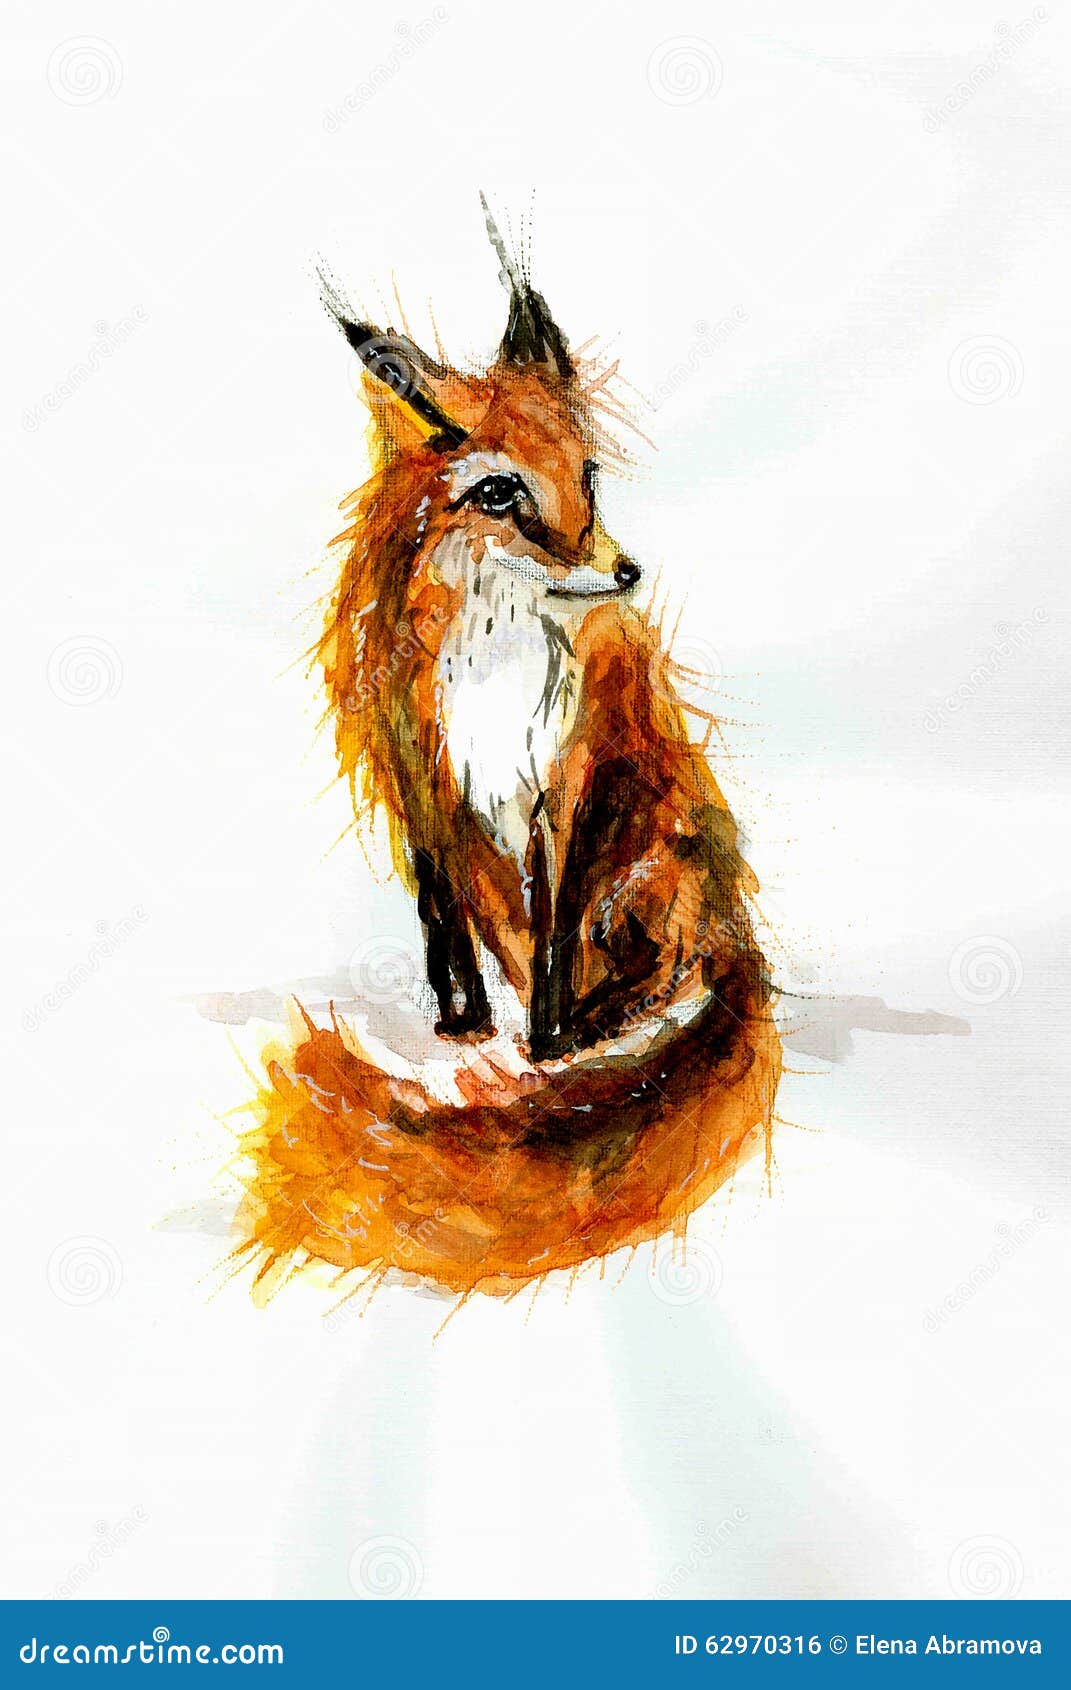 4461 Red Fox Sketch Images Stock Photos  Vectors  Shutterstock